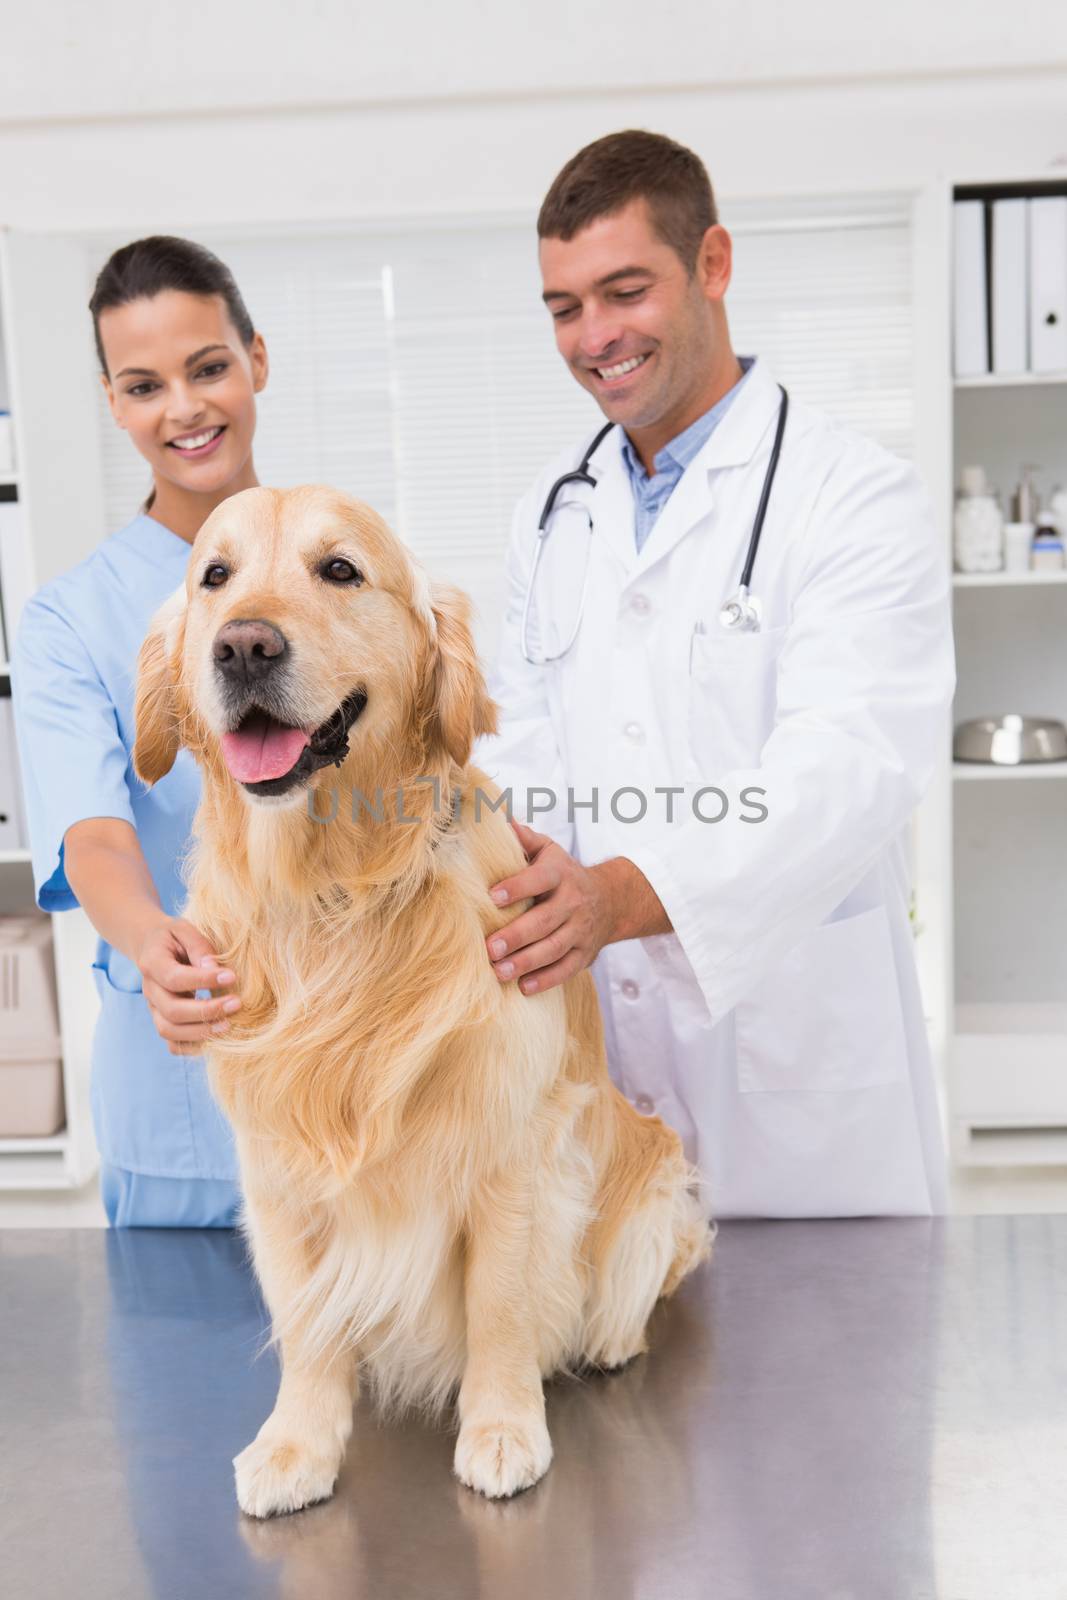 Vet coworker examining dog in medical office